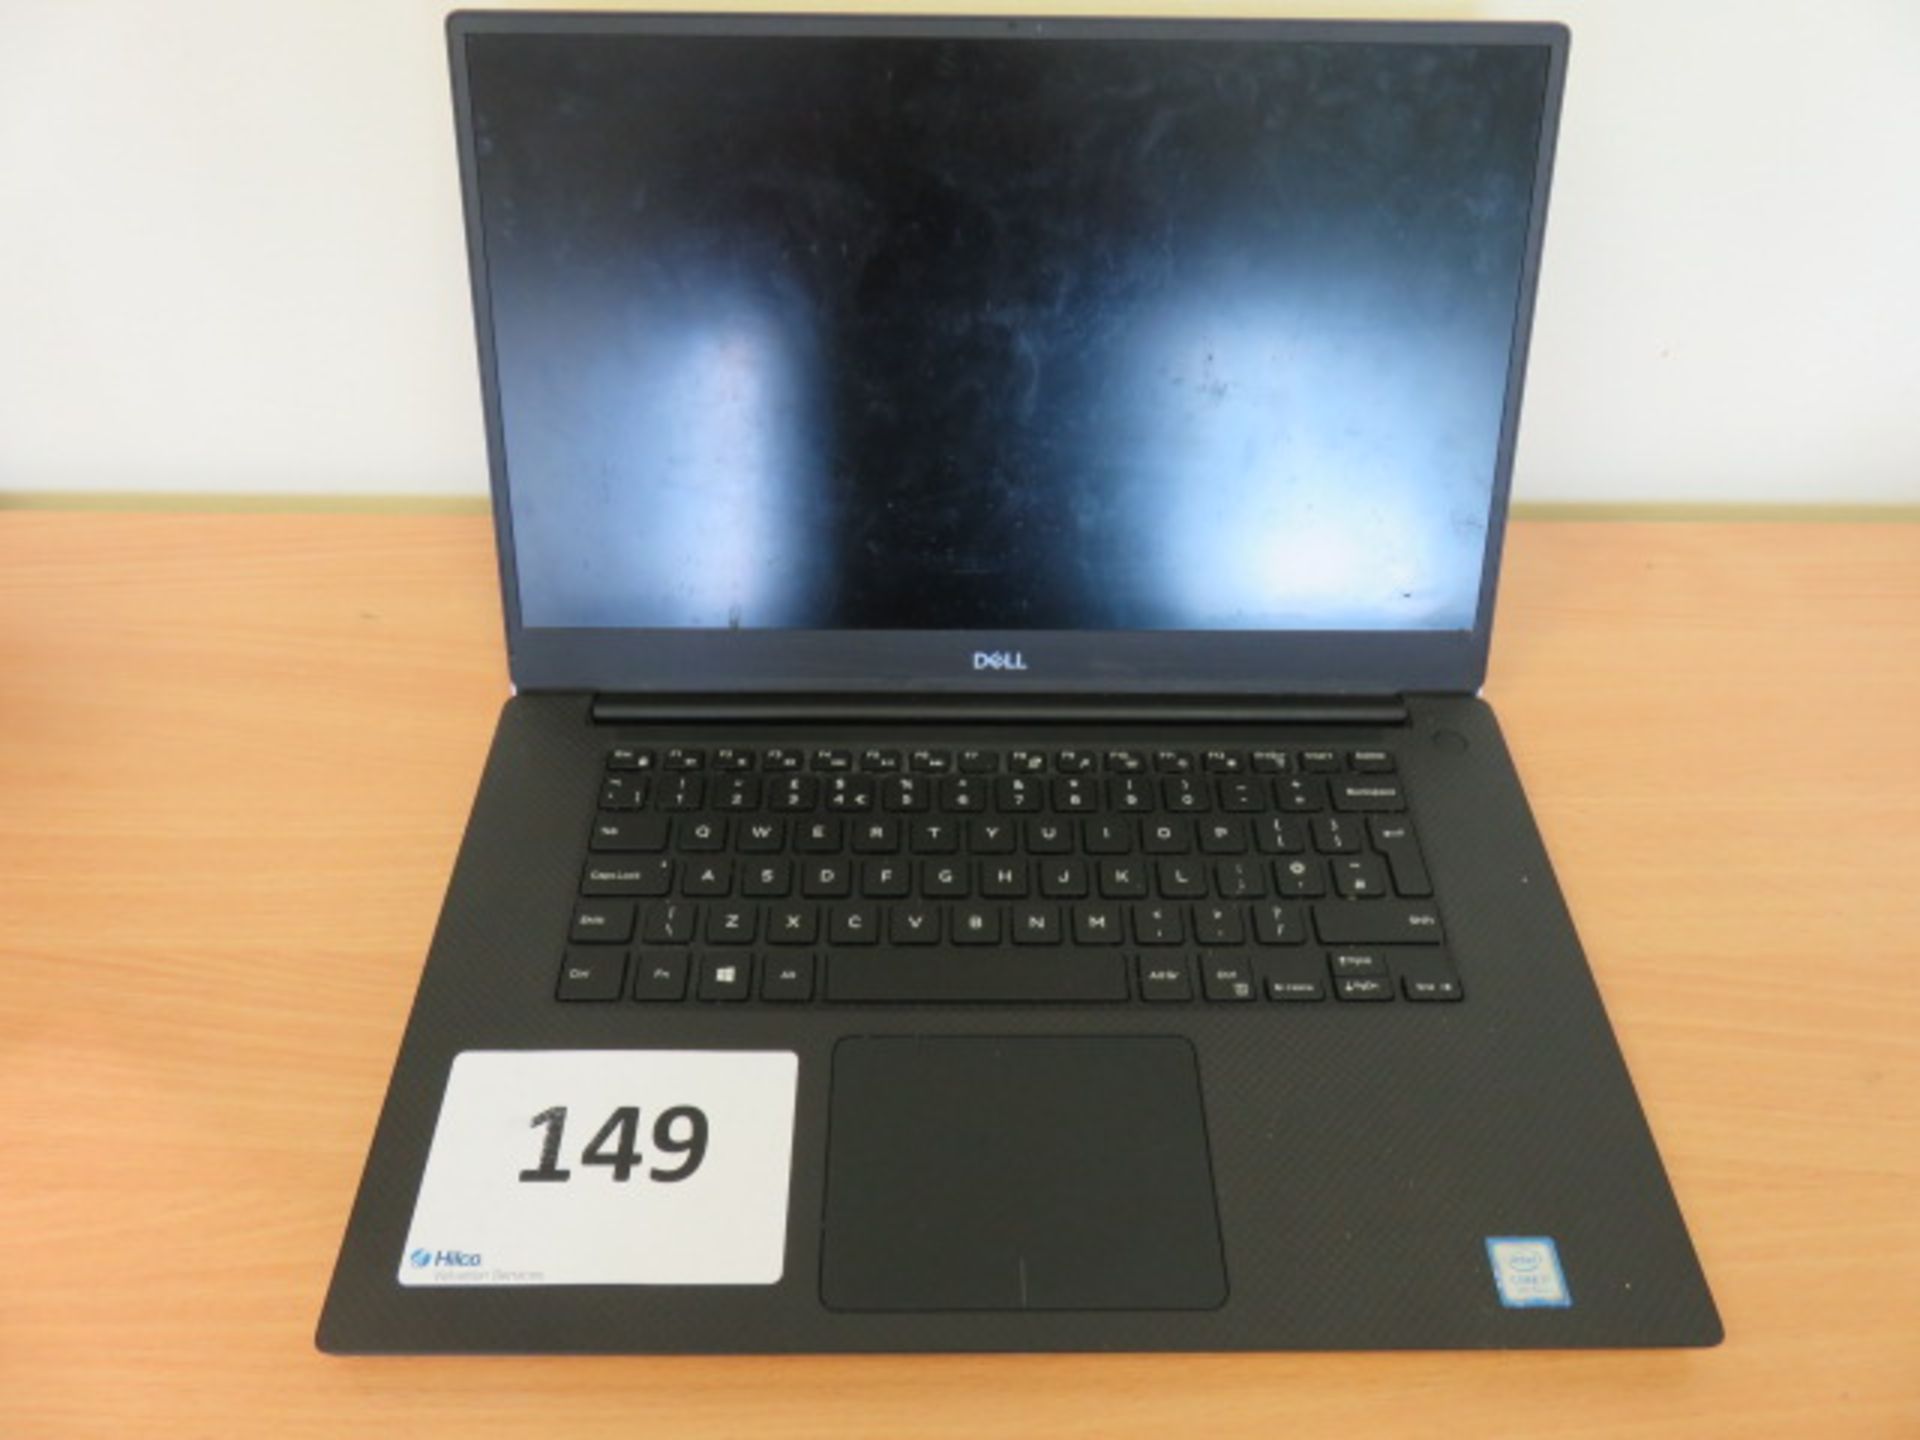 Dell XPS 15 7590 15in Core i7 9th Gen Laptop Serial No. JNCQL13 (2020) (Asset No. LTW-392)